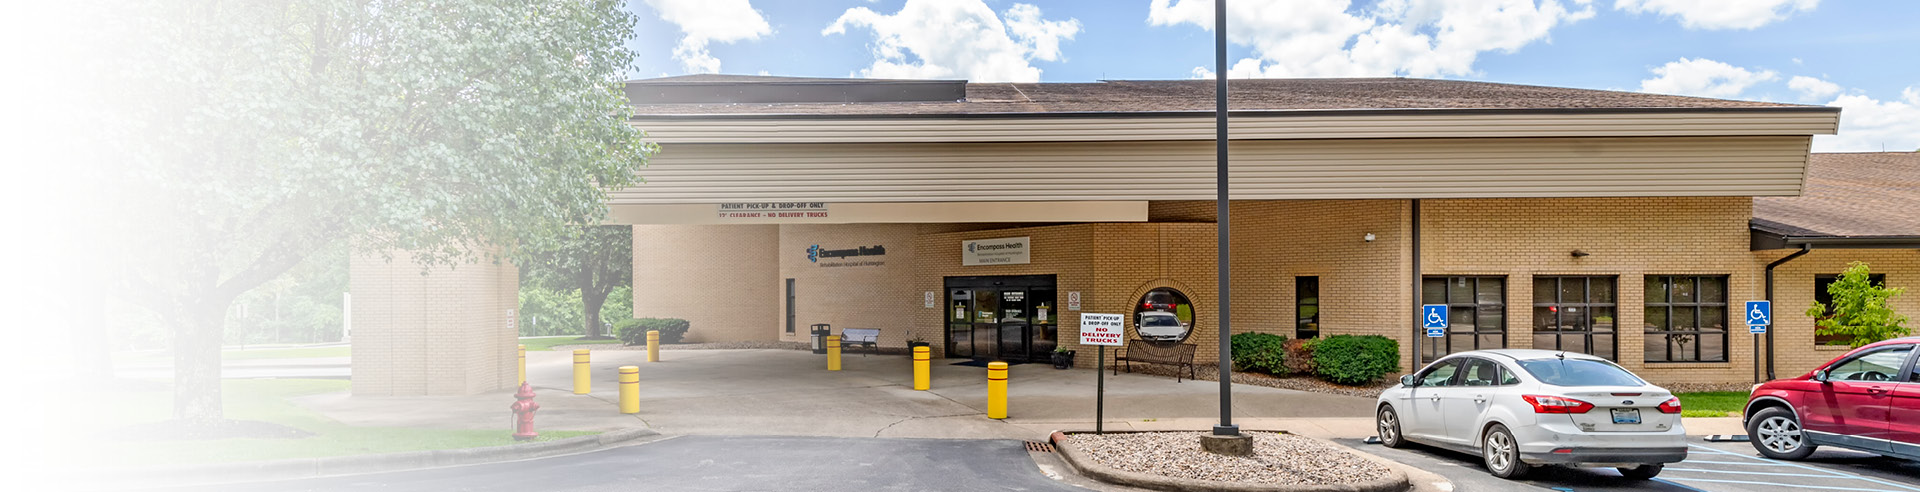 Encompass Health Rehabilitation Hospital of Huntington exterior